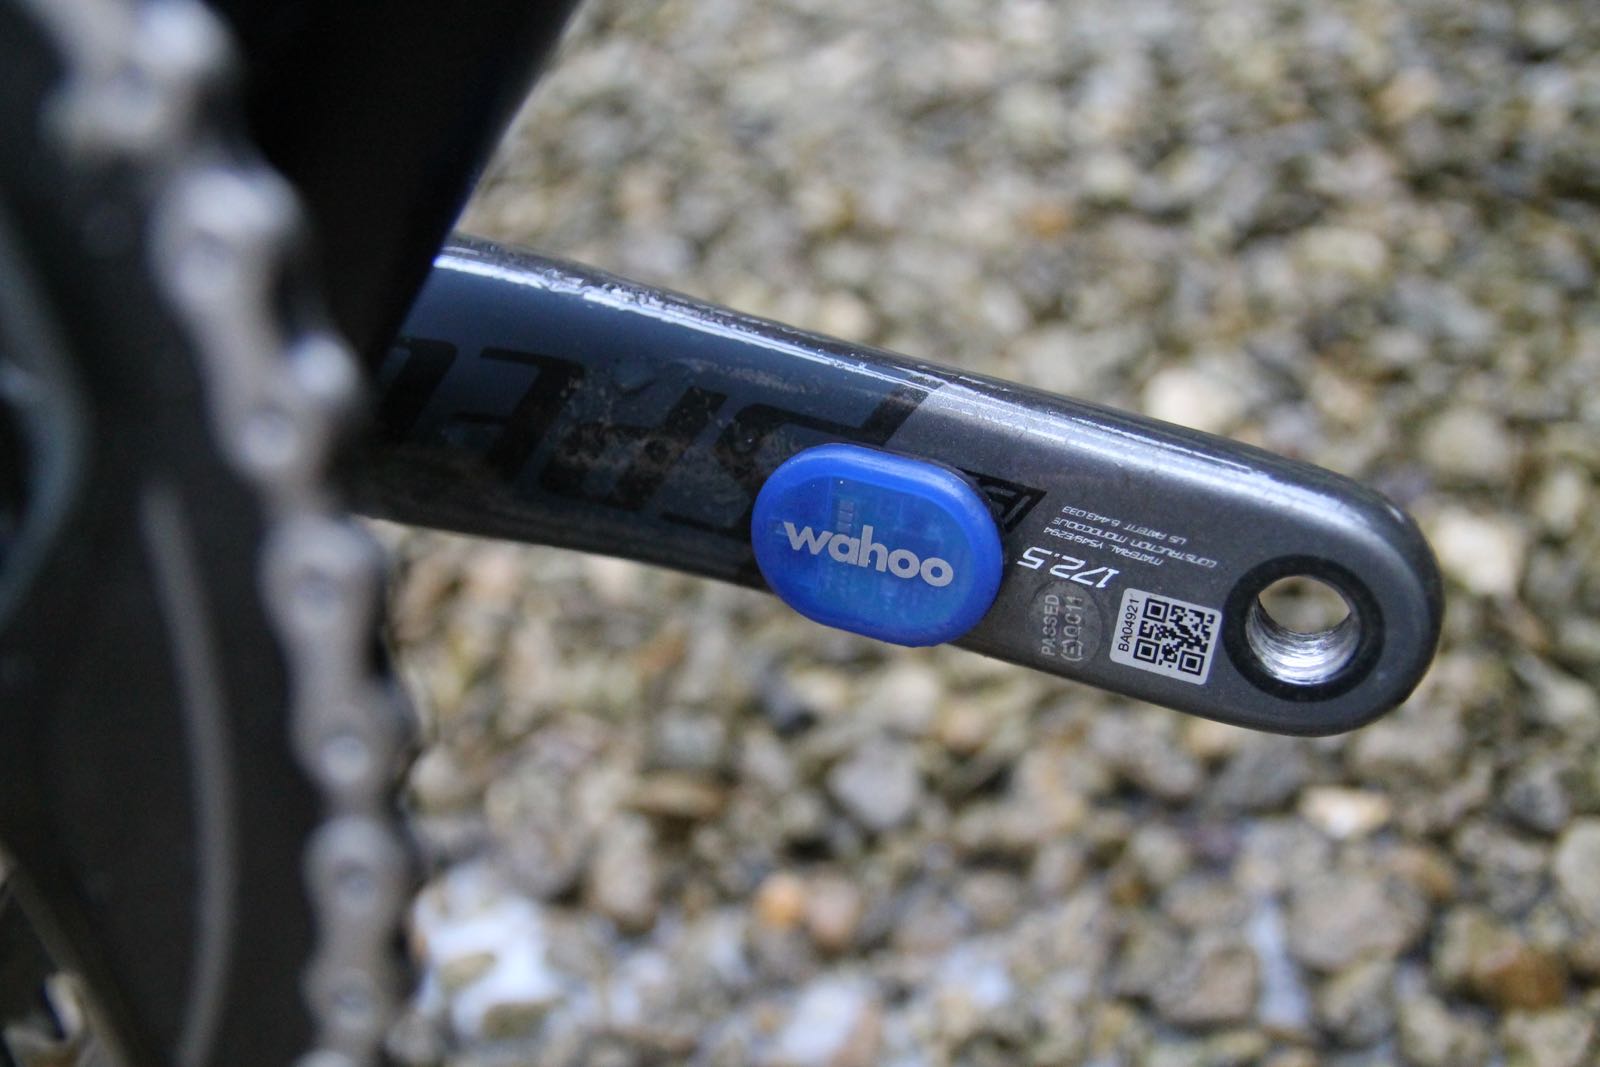 wahoo cadence sensor and heart rate monitor